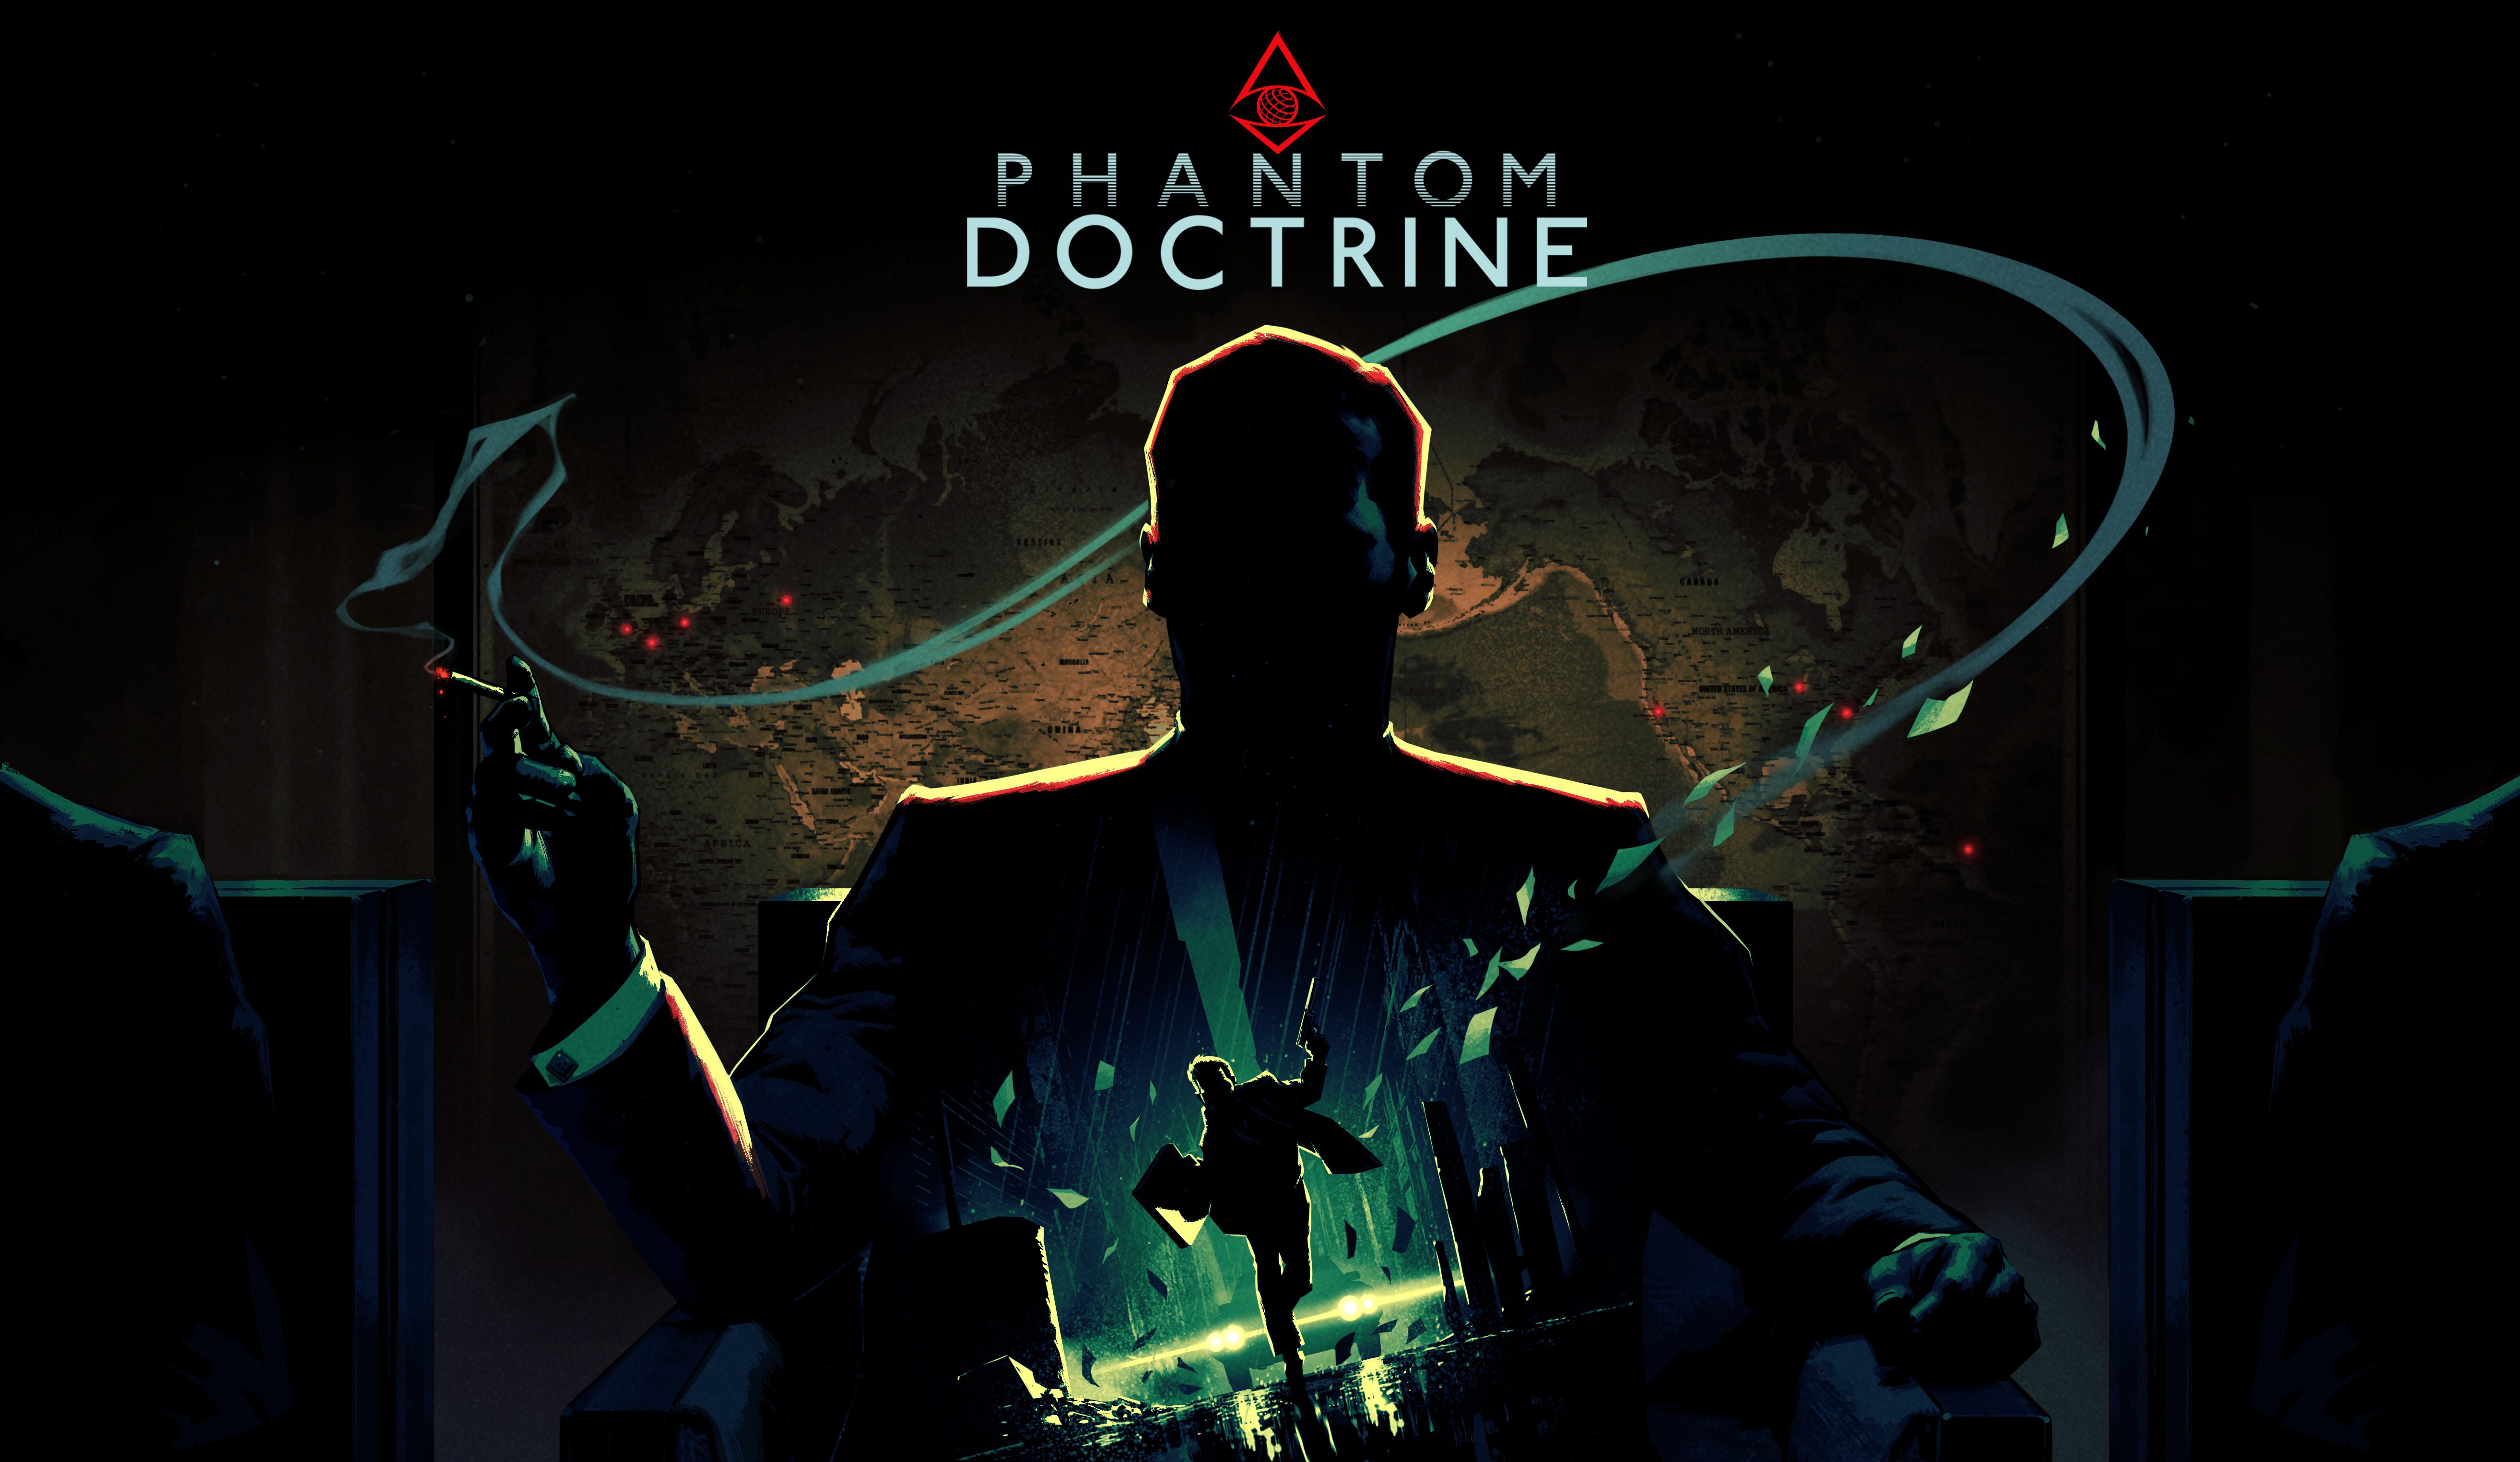 Phantom Doctrine receives a new story and gameplay trailer ahead of E3